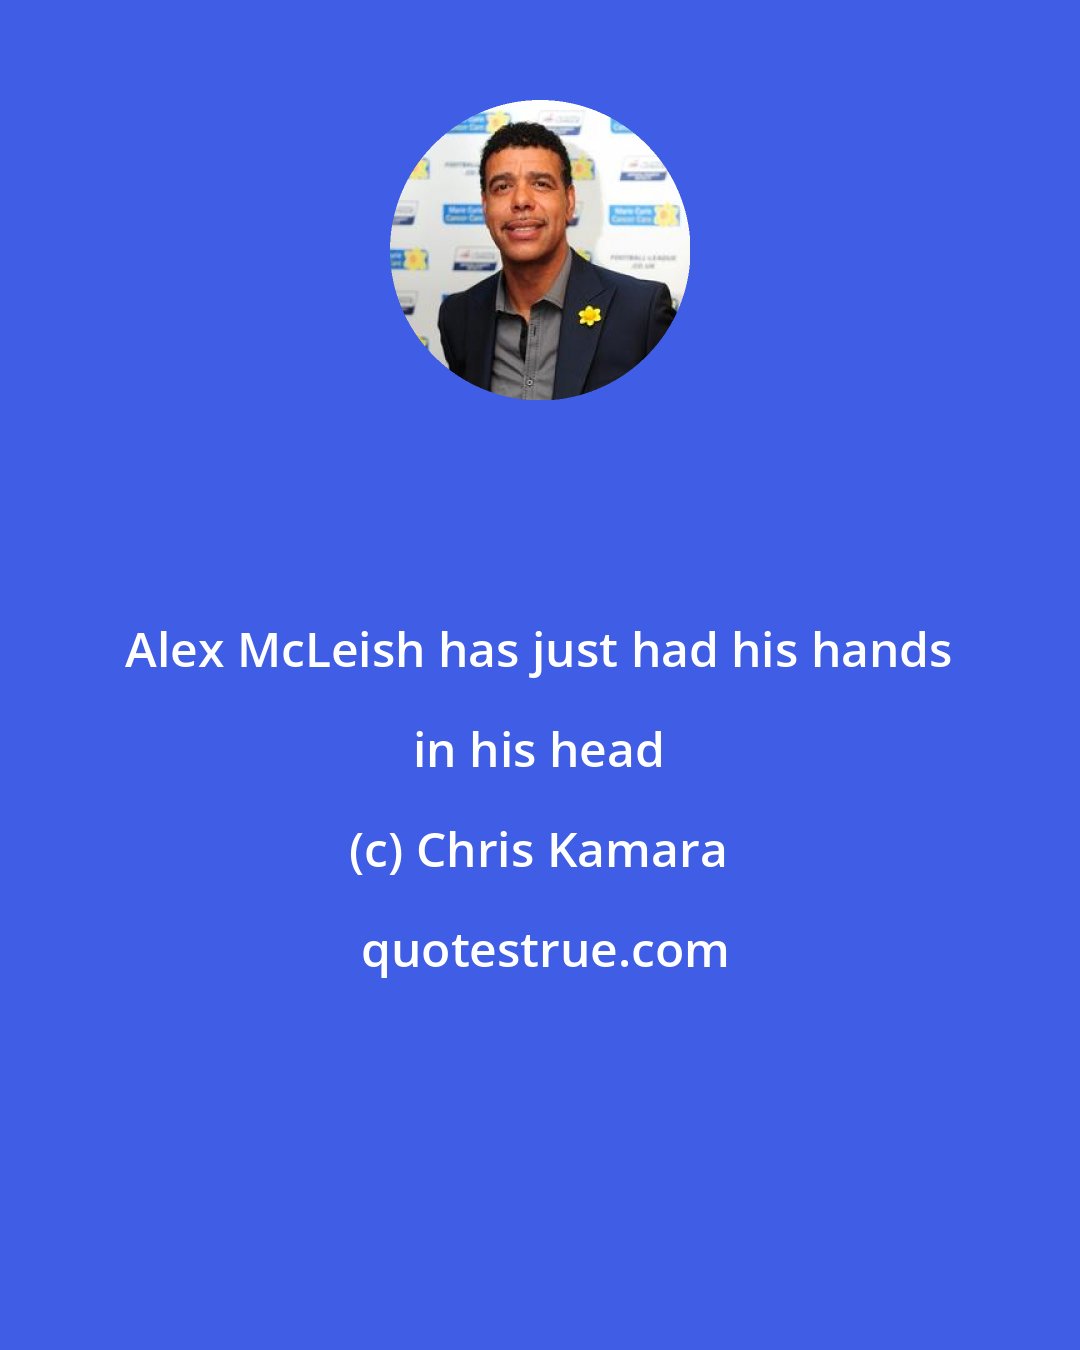 Chris Kamara: Alex McLeish has just had his hands in his head